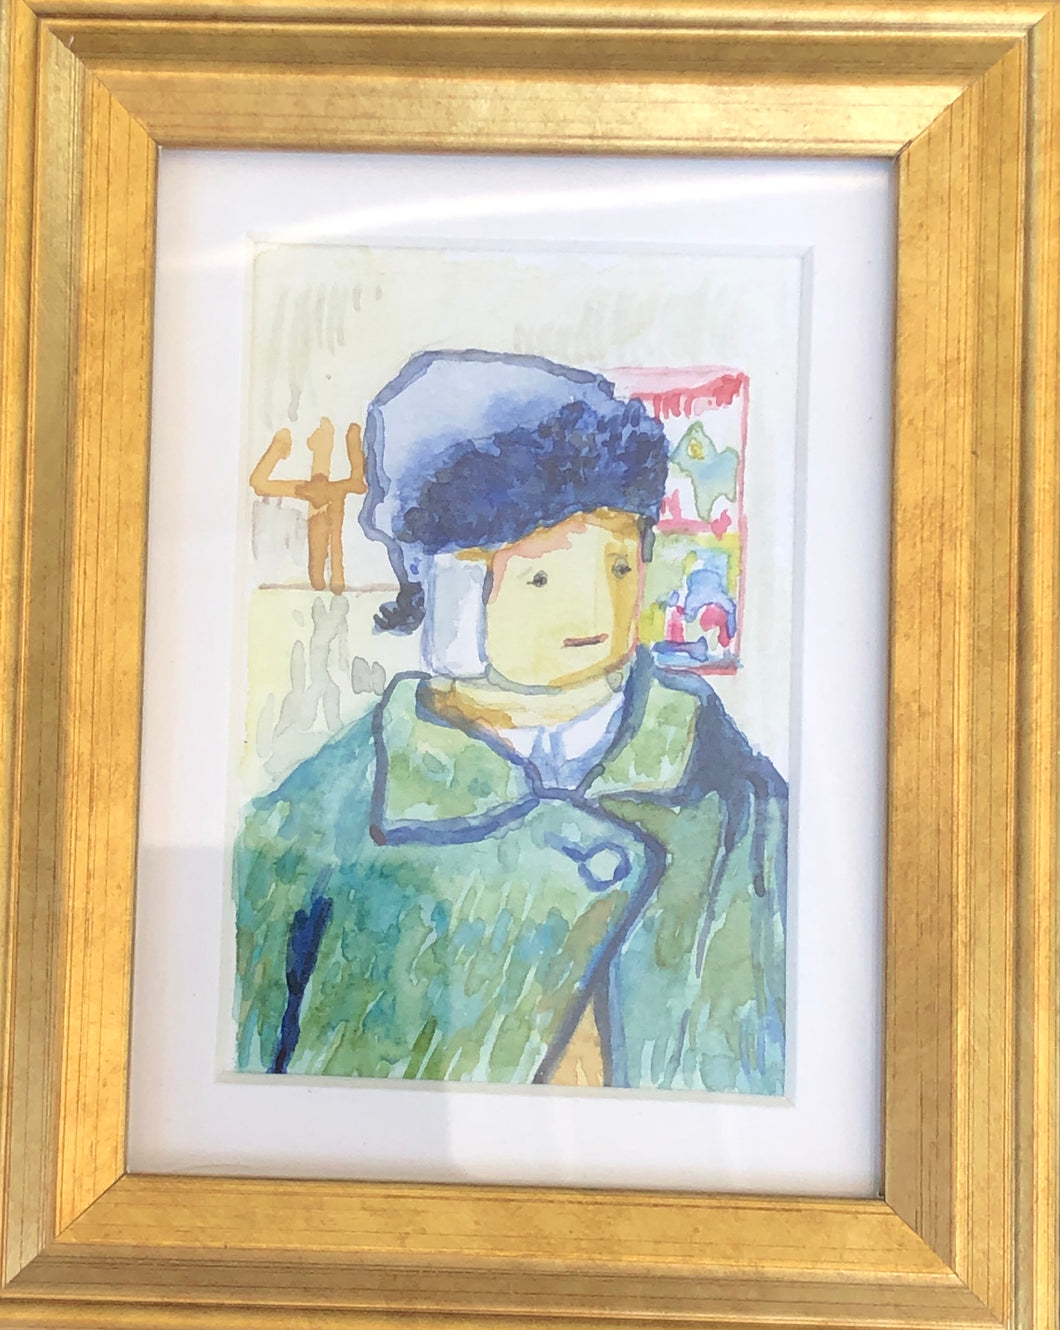 Van Gogh’s Self Portrait with Ear Bandage, Lego style